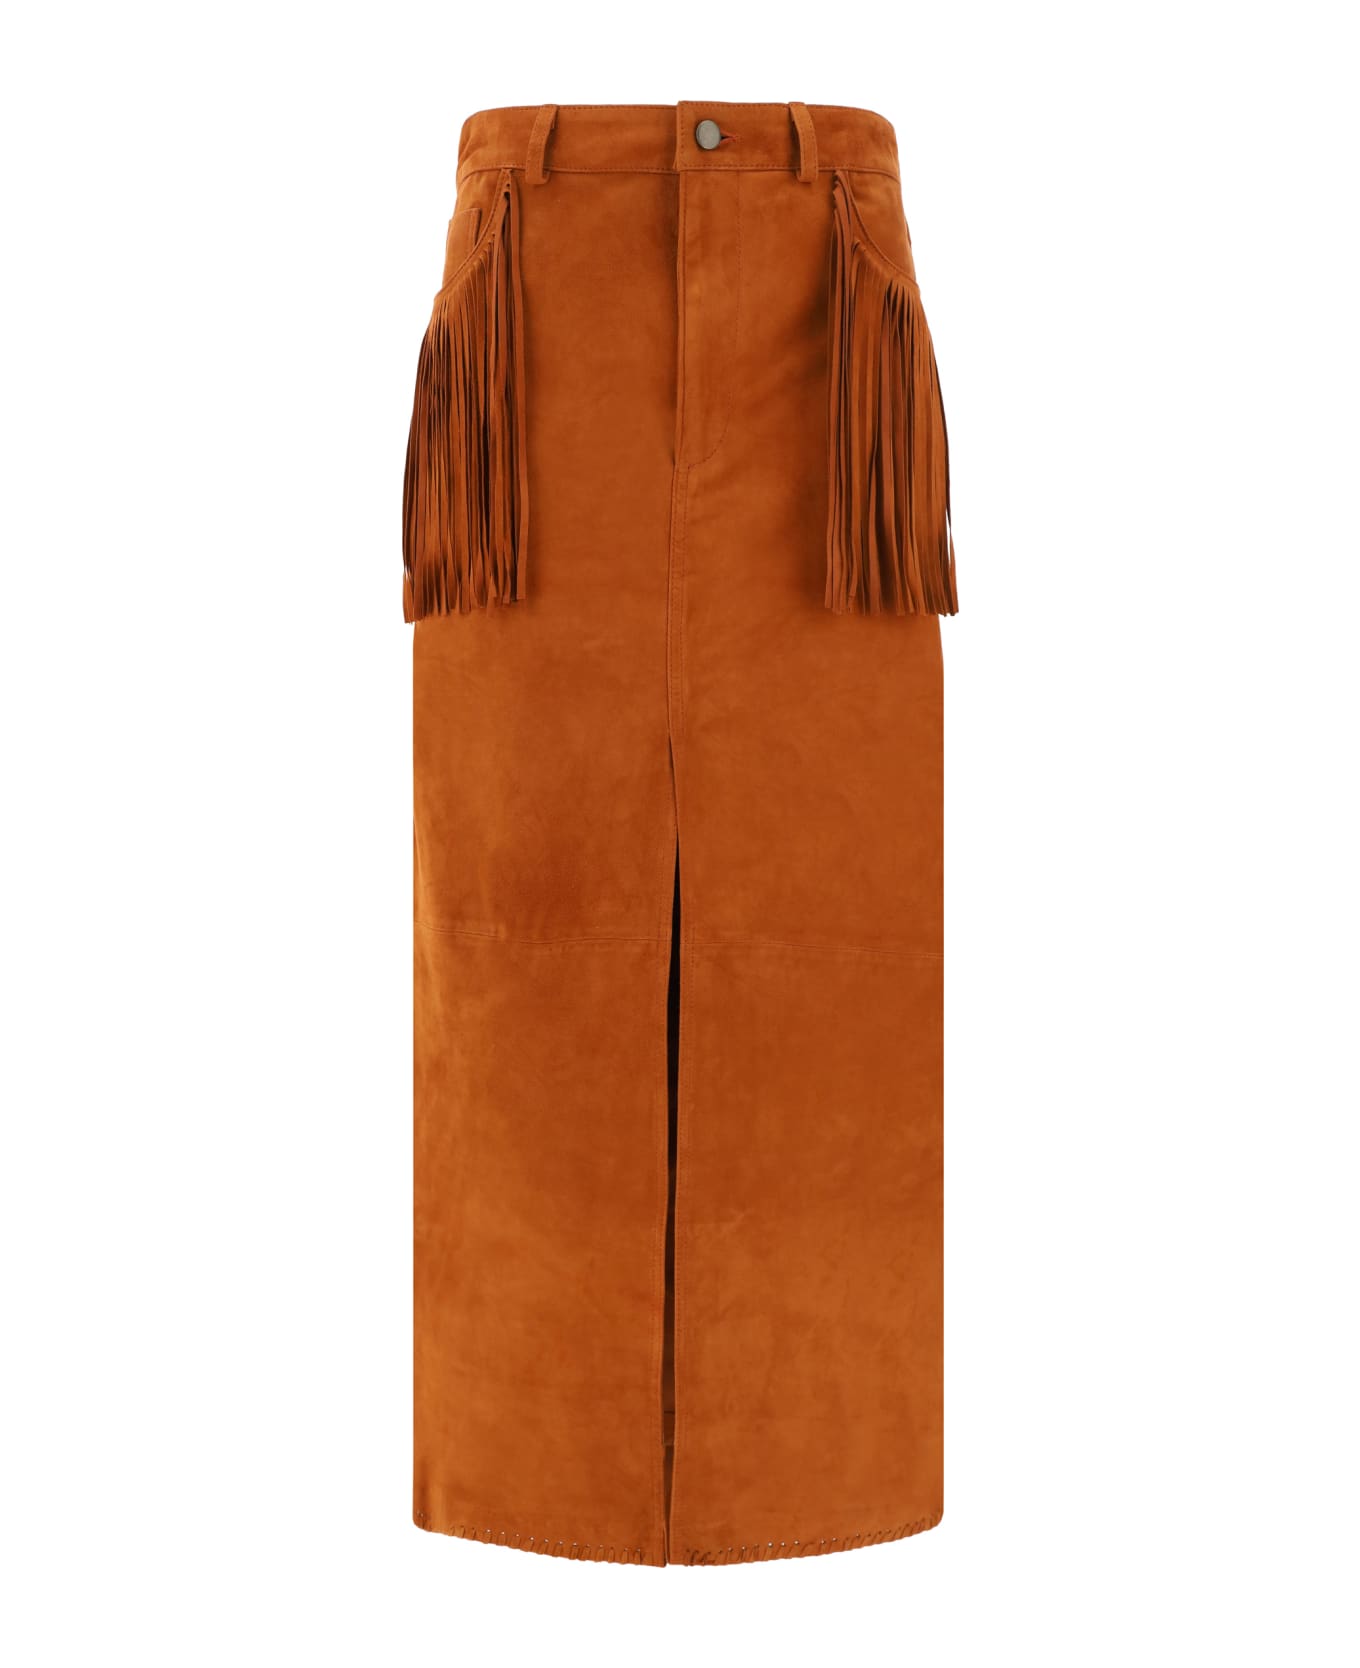 Wild Cashmere Leather Skirt - Cognac 390